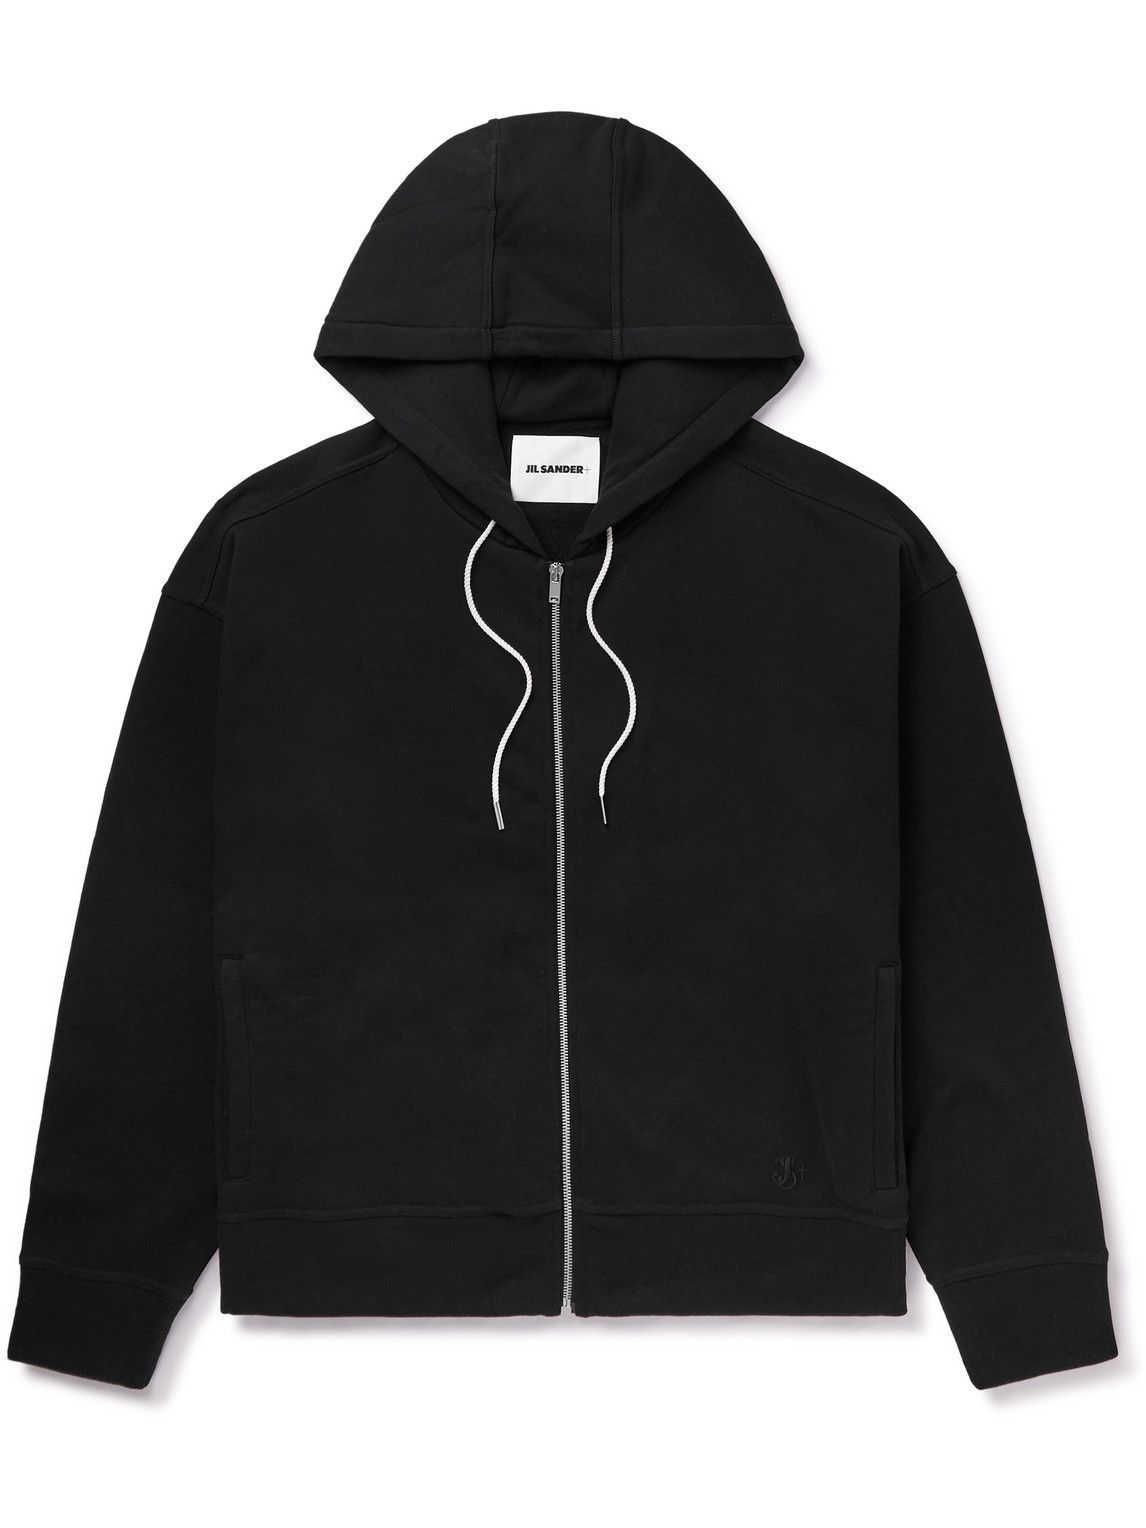 Jil Sander - Logo-Embroidered Cotton-Jersey Zip-Up Hoodie - Black 